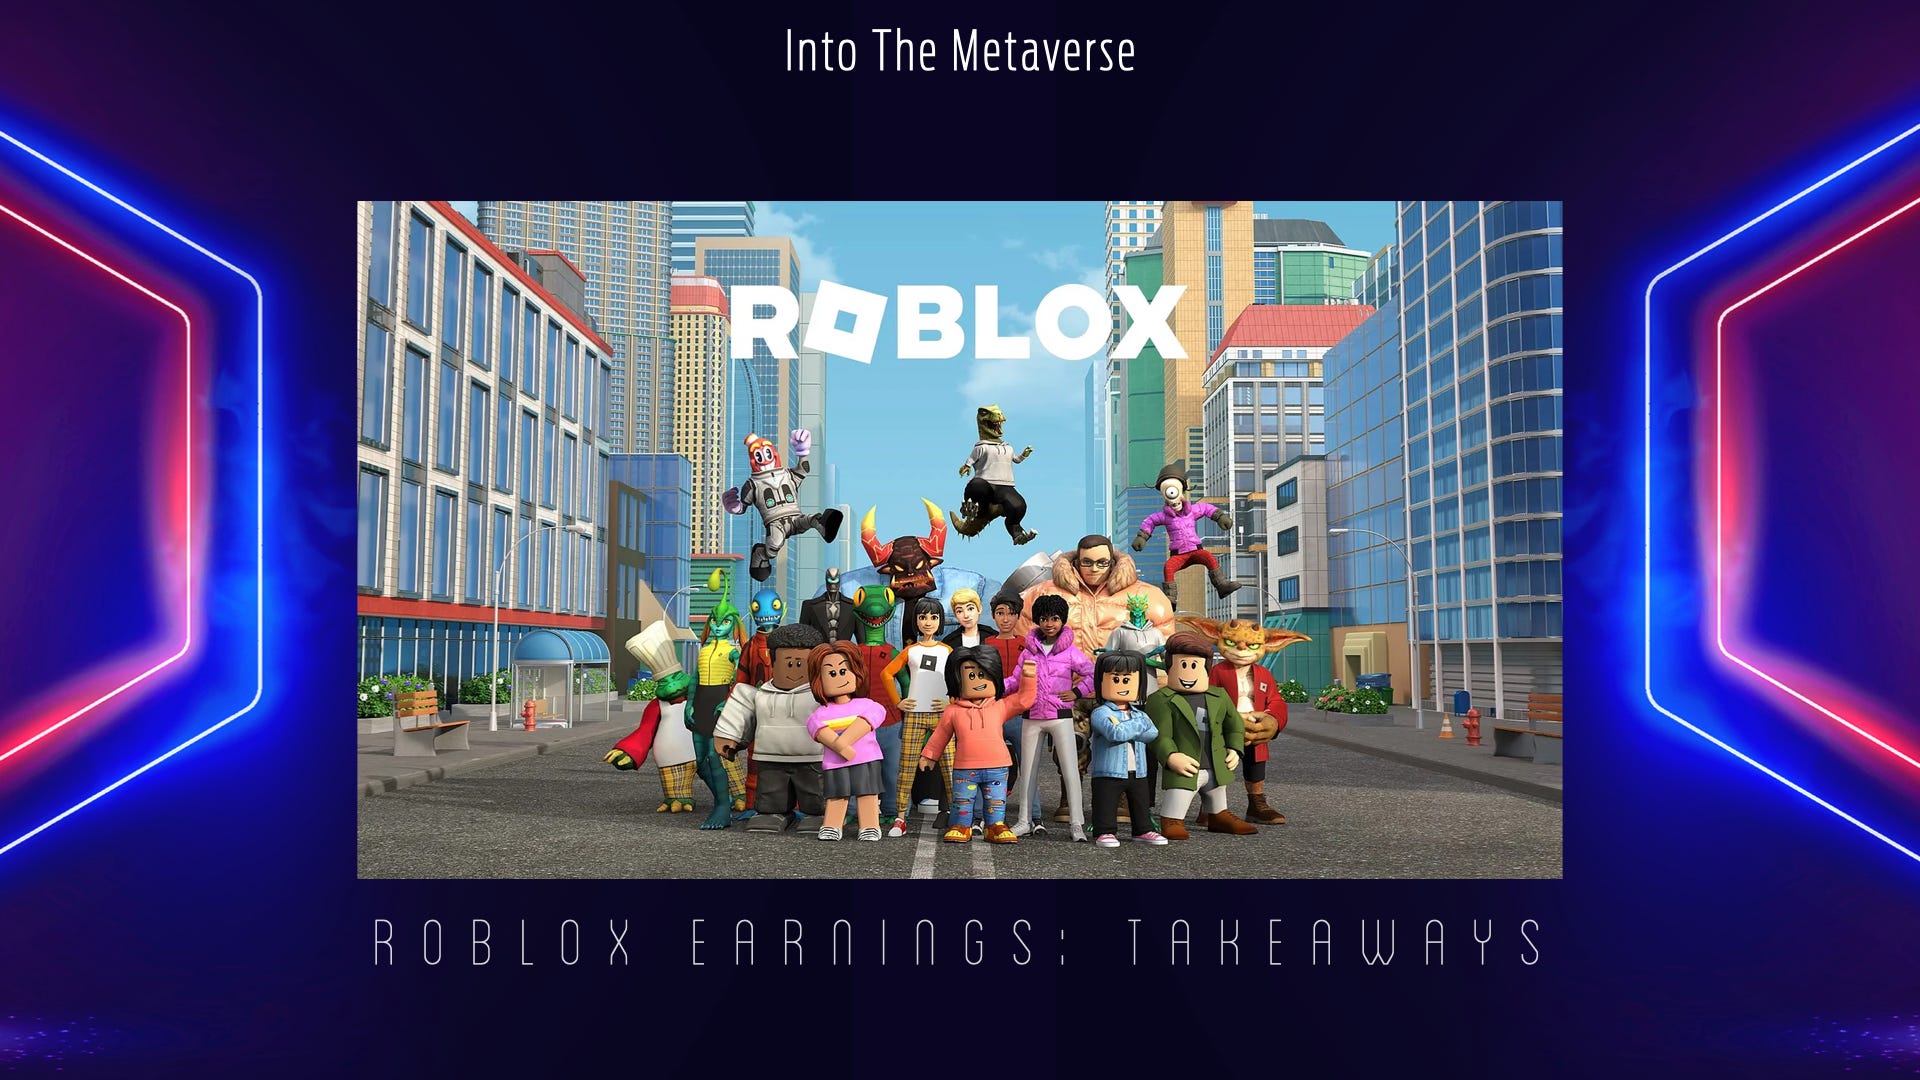 Roblox CEO Dave Baszucki believes users will create the metaverse